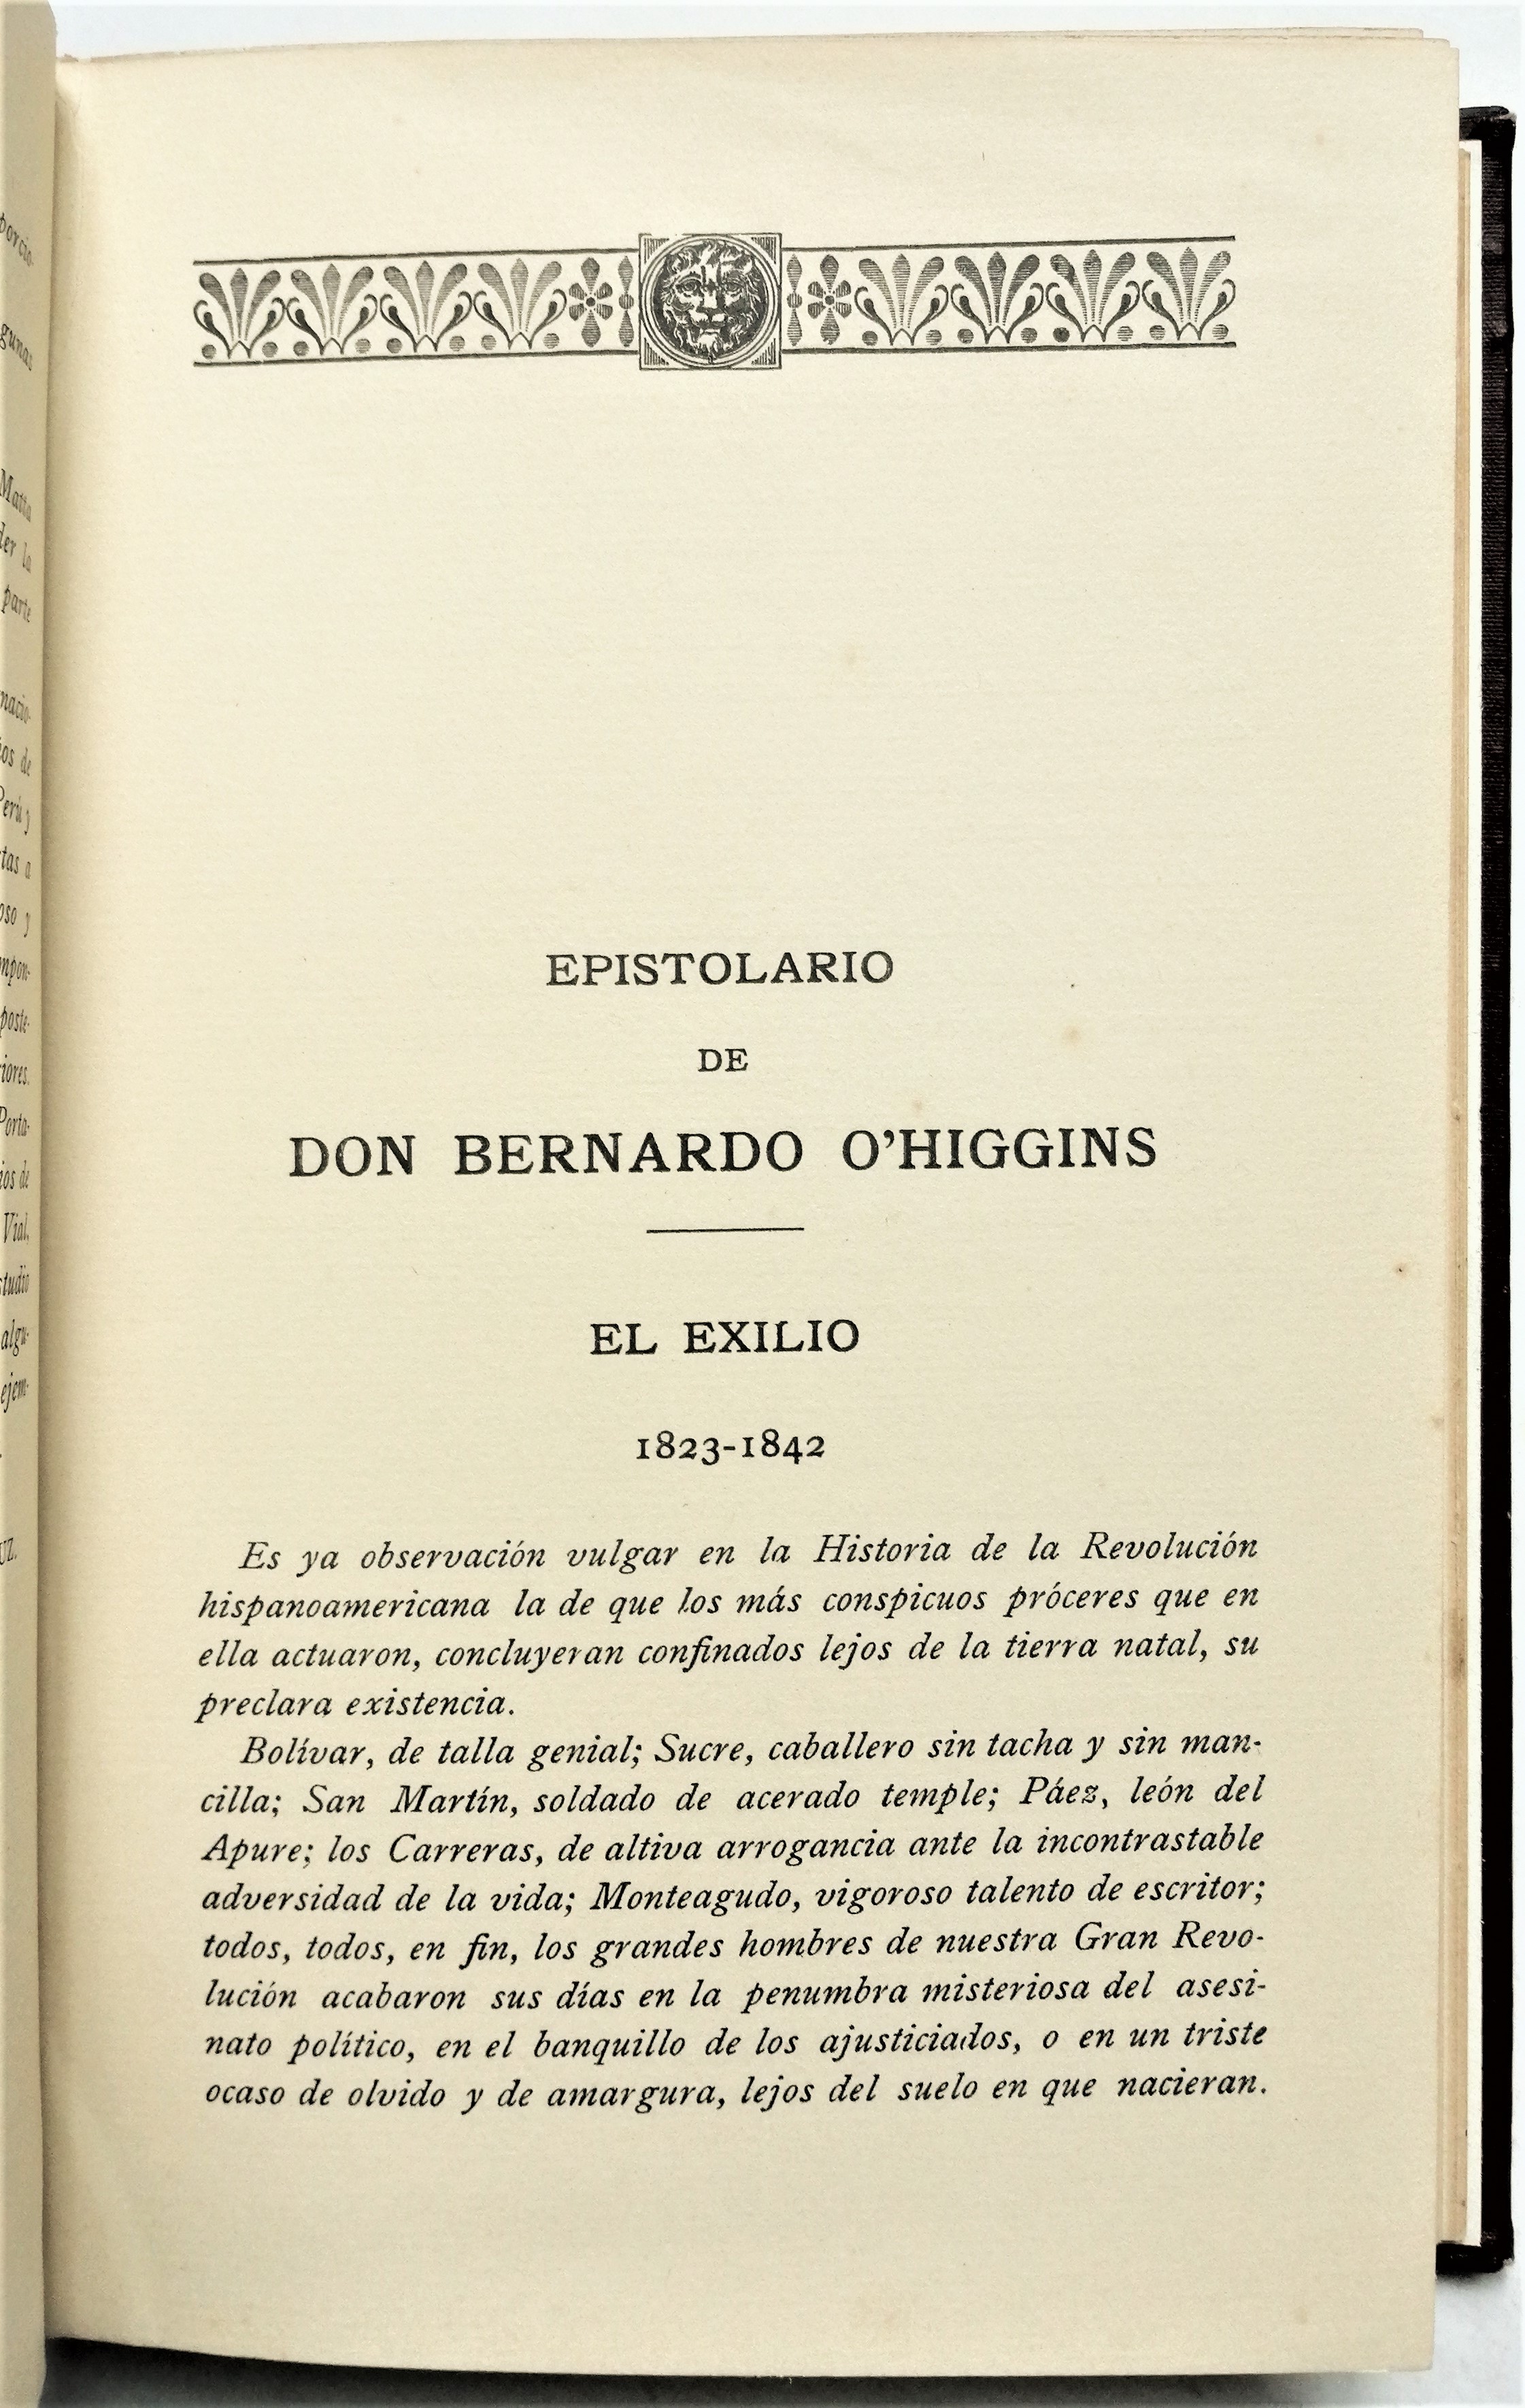 Ernesto de la Cruz - Epistolario de D. Bernardo O'higgins (1798-1823)